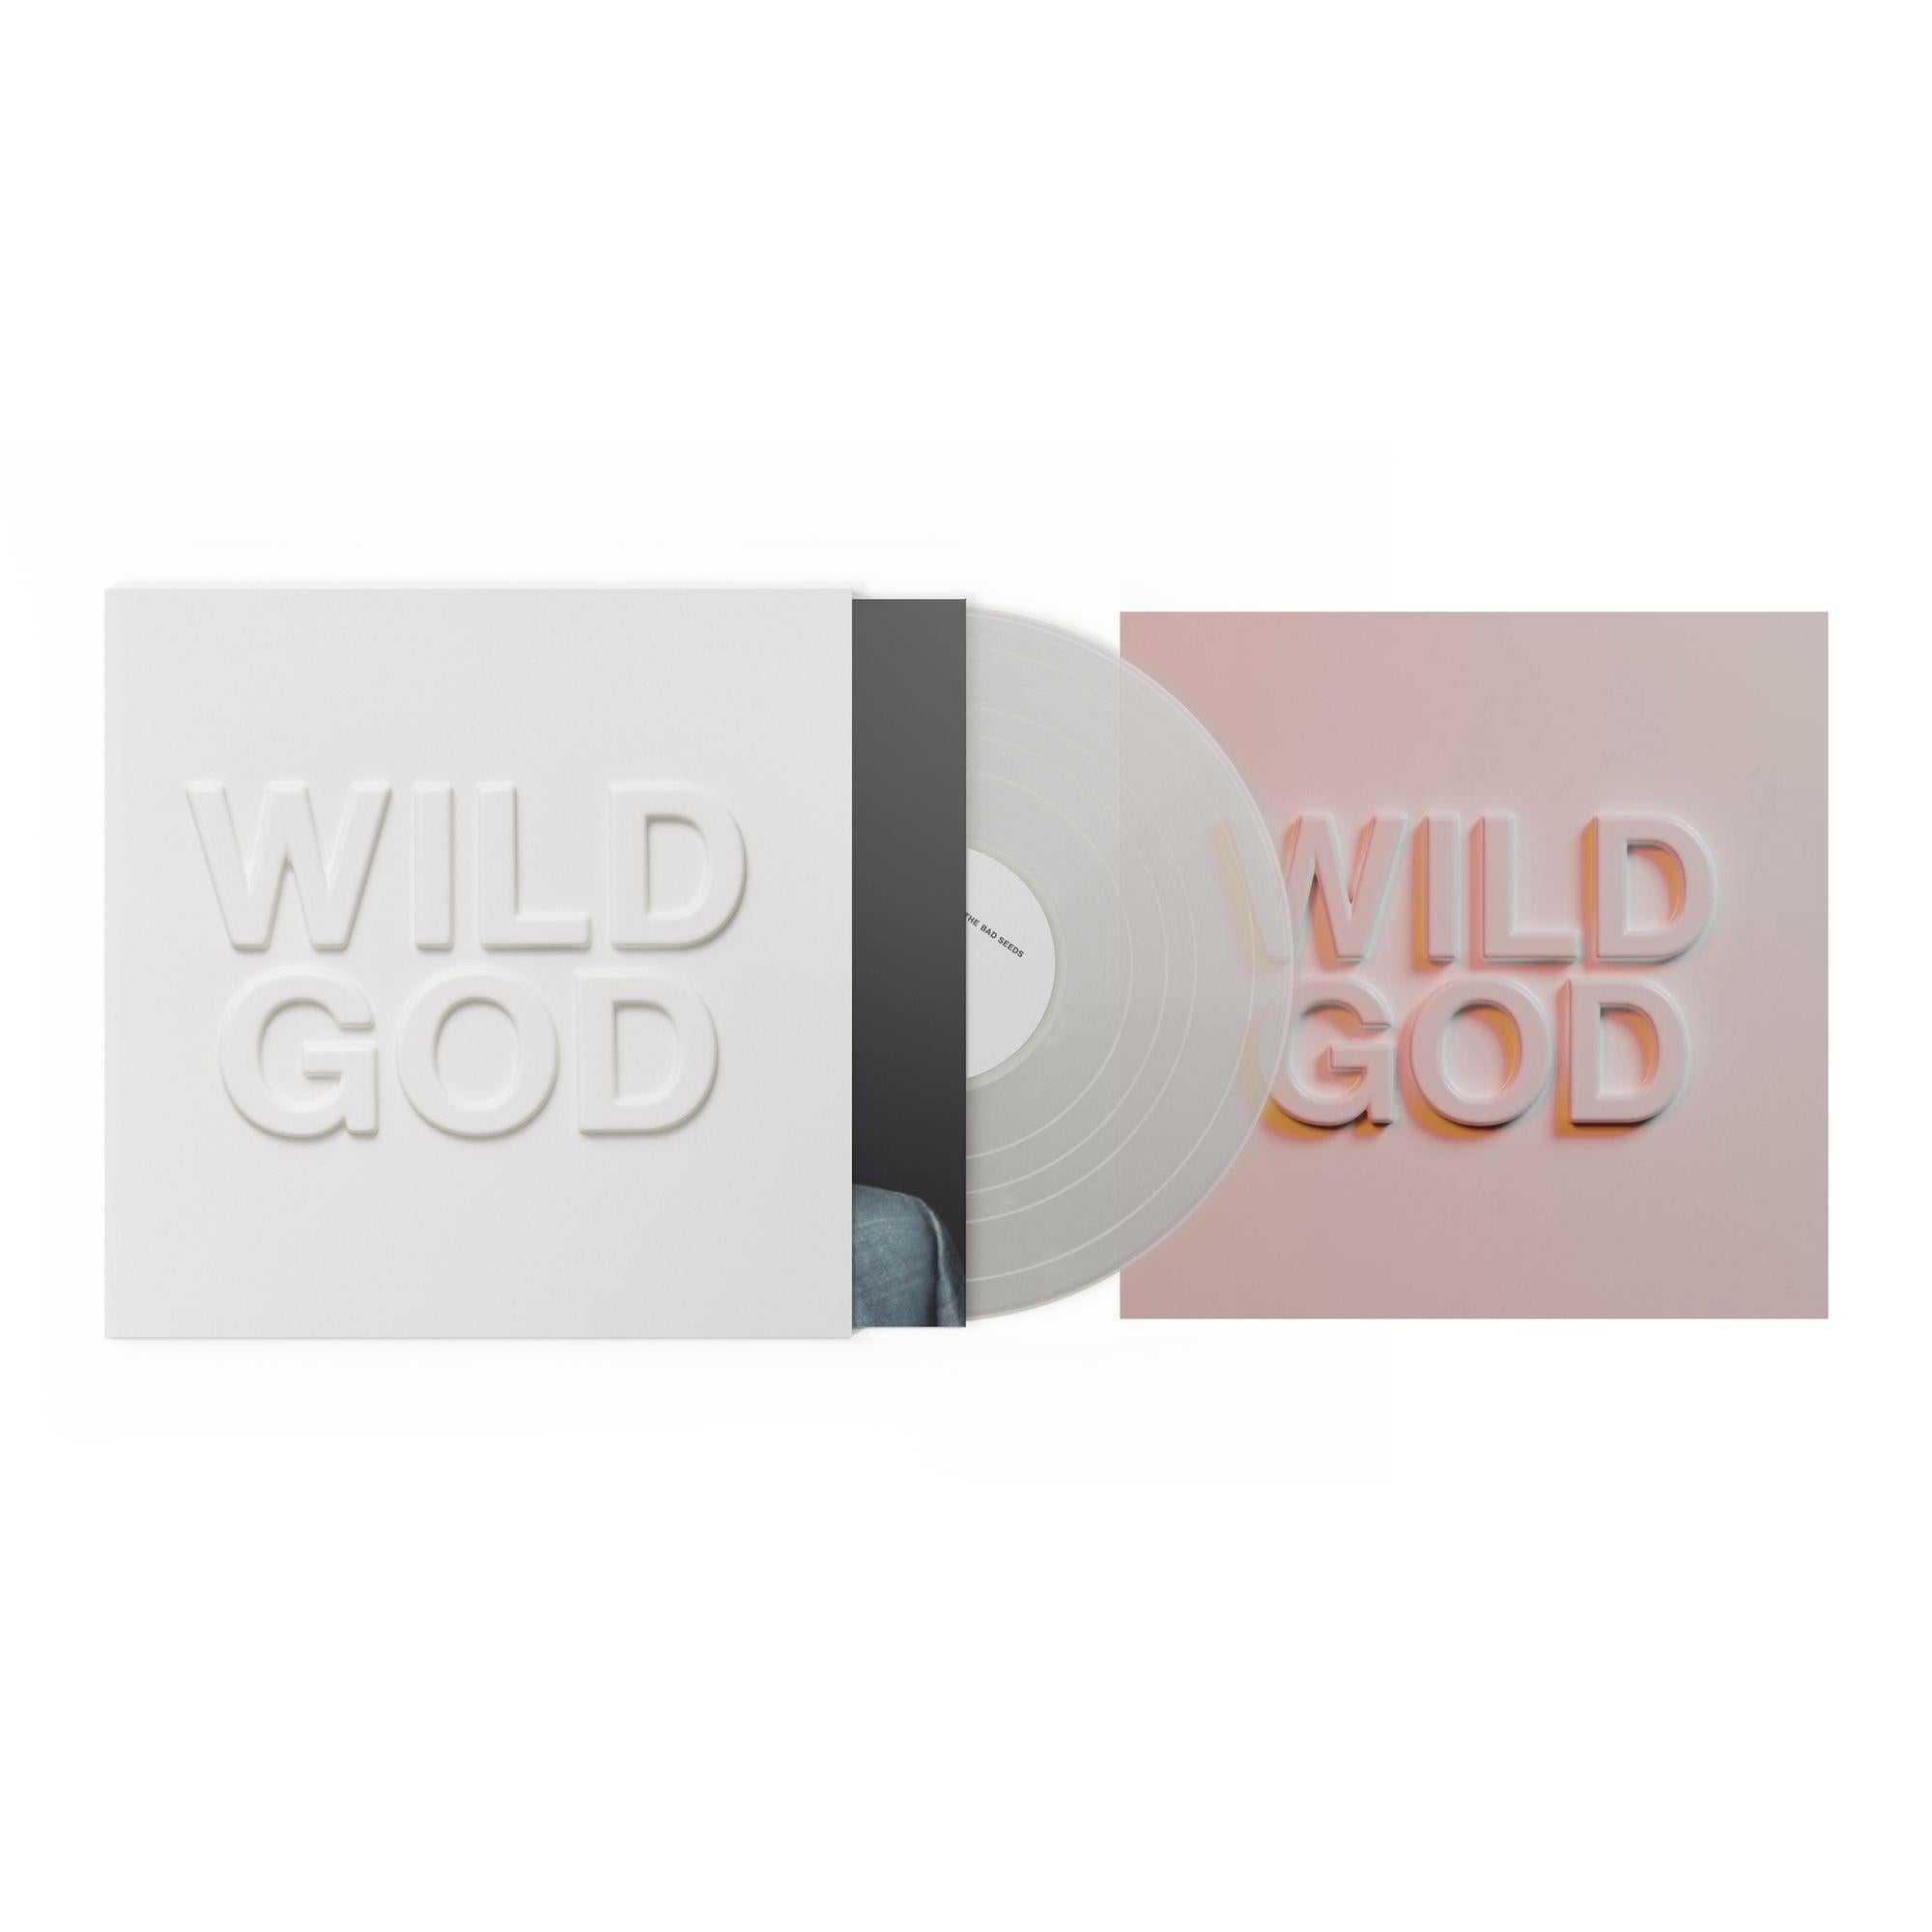 wild god (limited edition art print bundle)